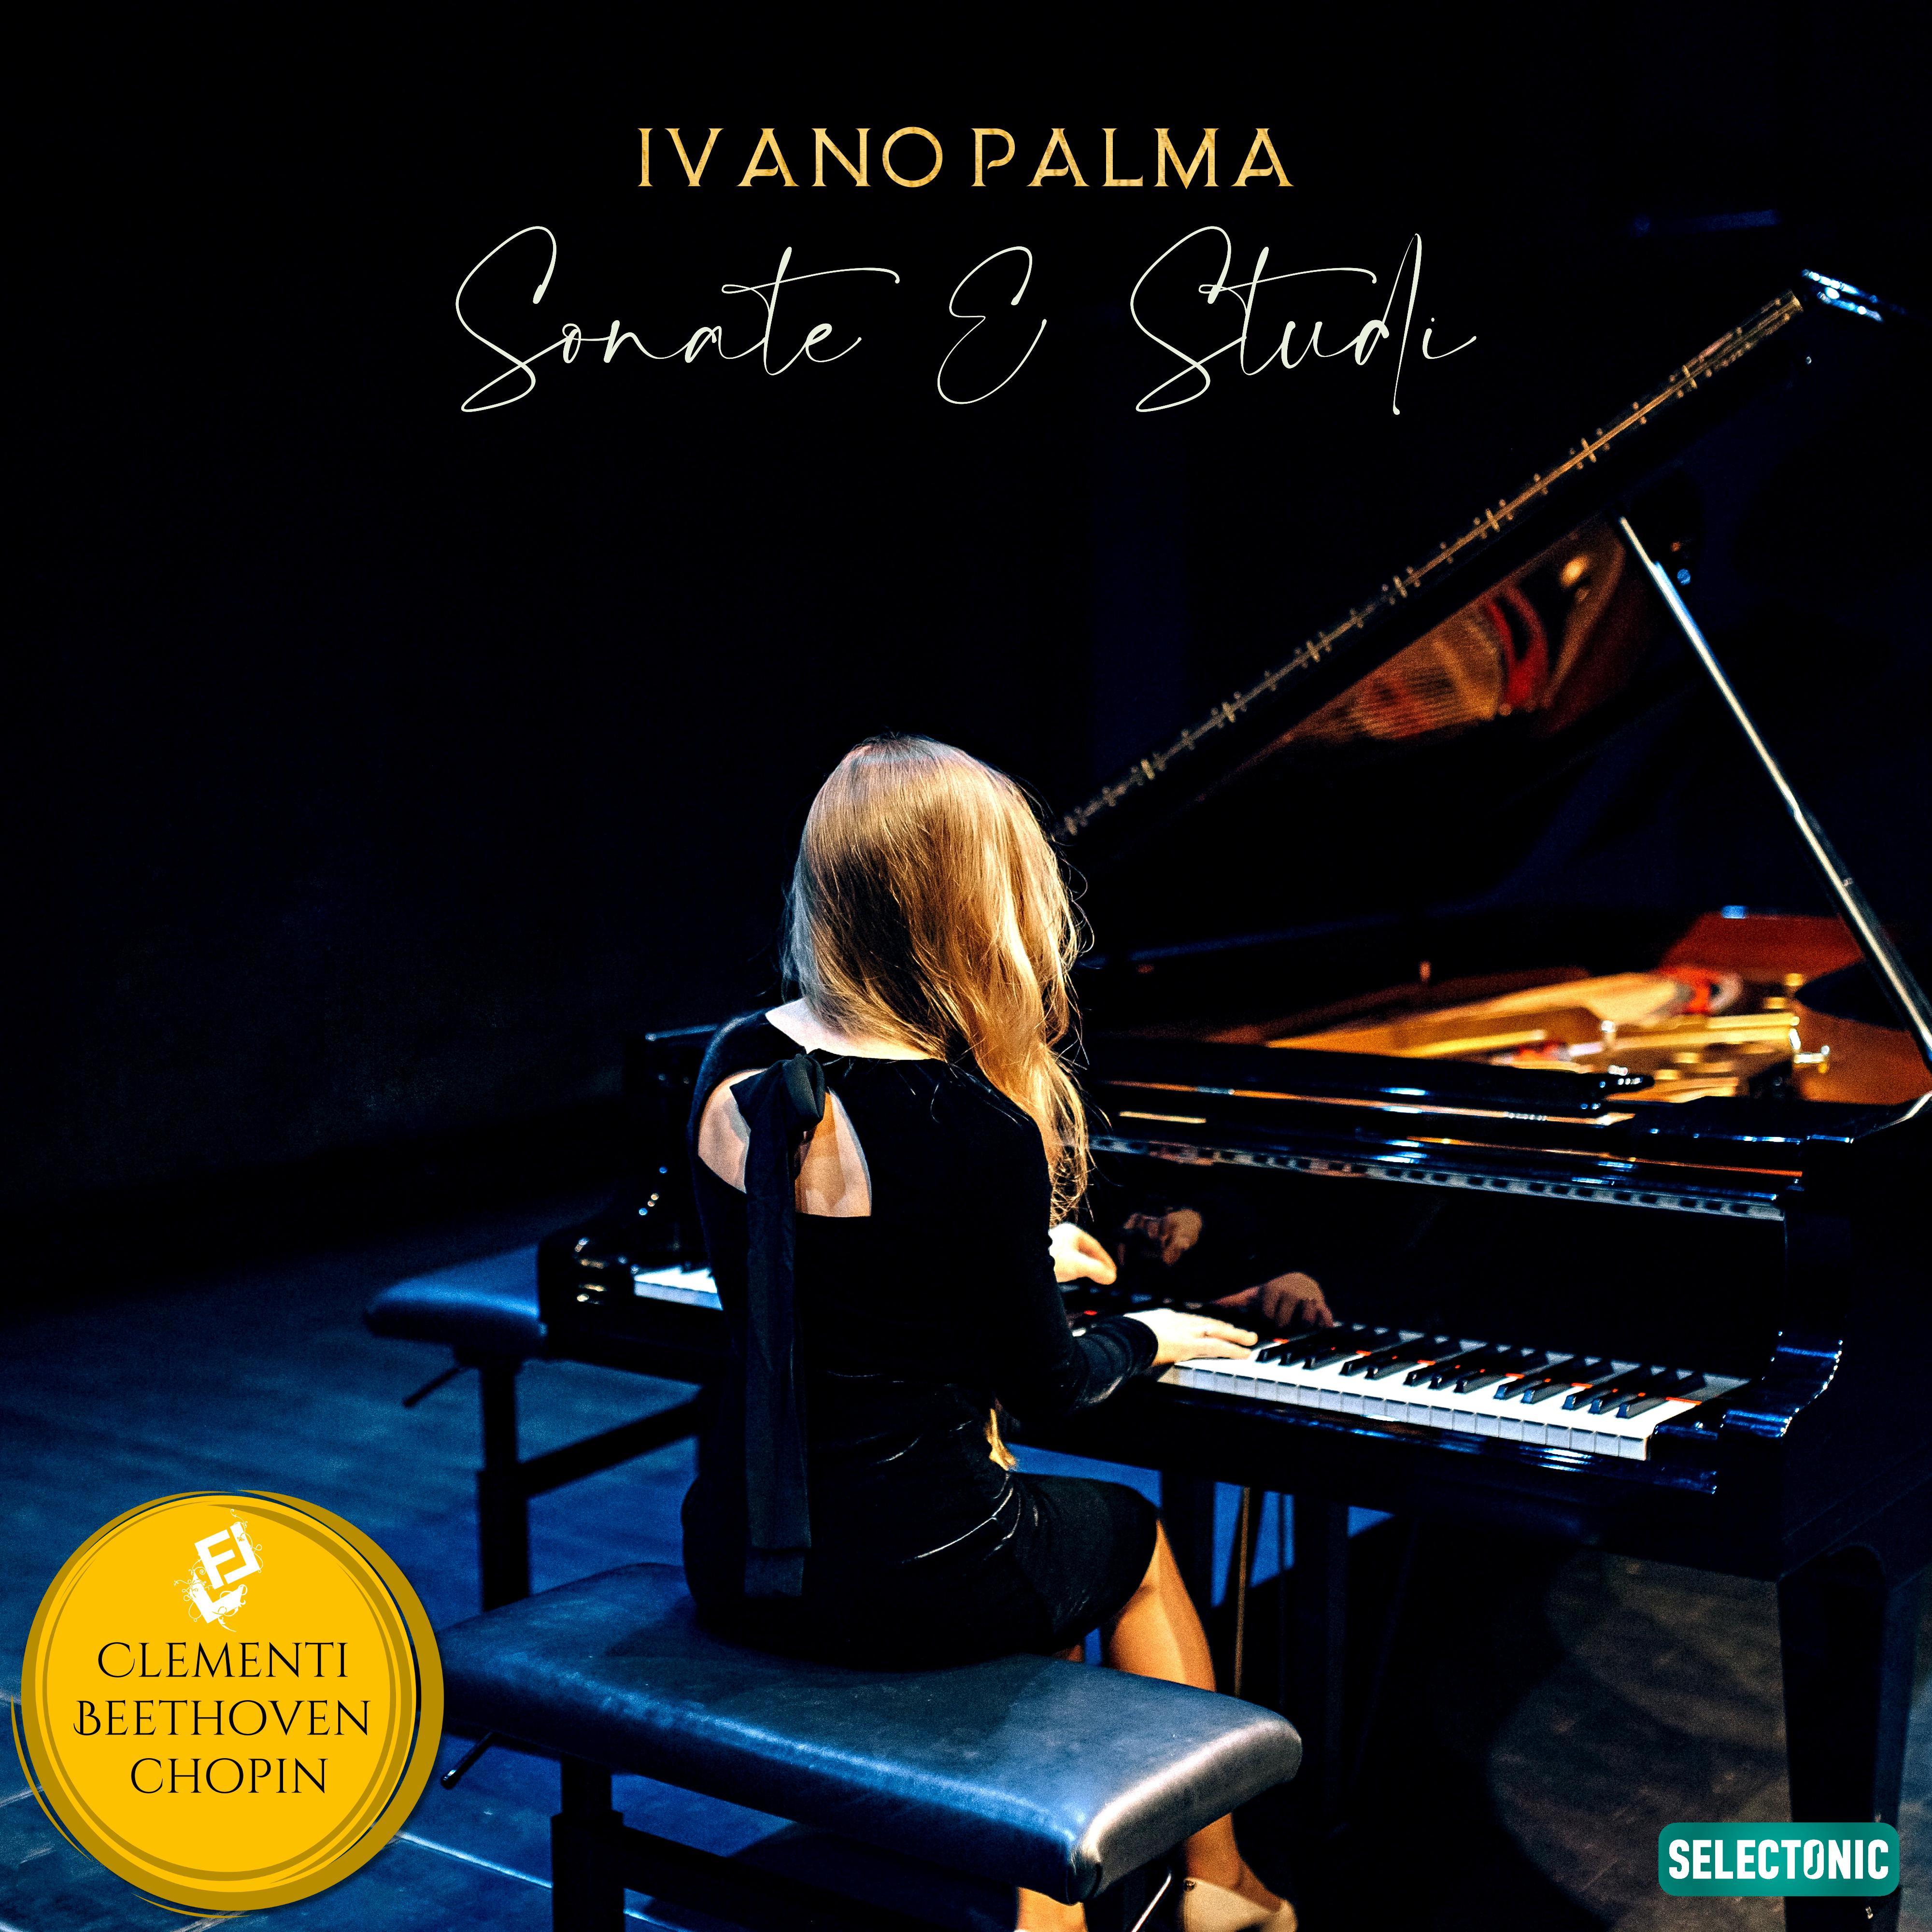 Ivano Palma - Piano Sonata in B-Flat Major, Op. 47, No. 2: III. Rondo - Allegro assai